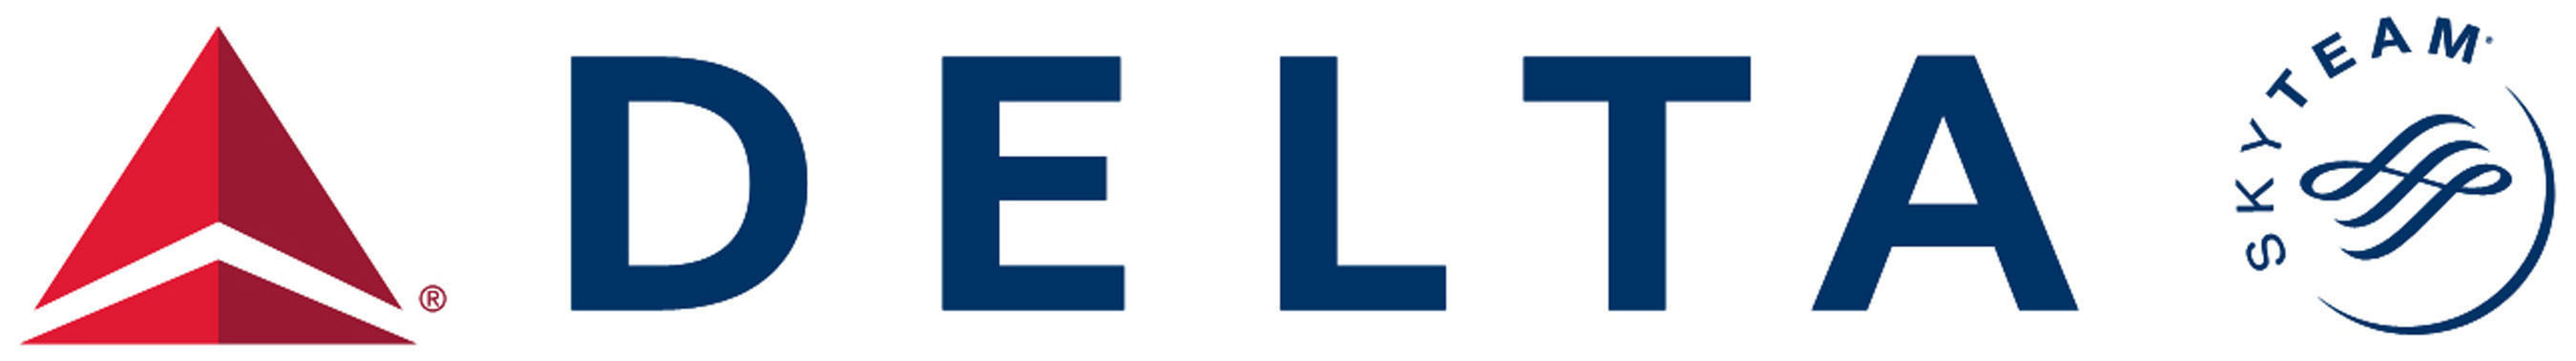 Delta SkyTeam logo